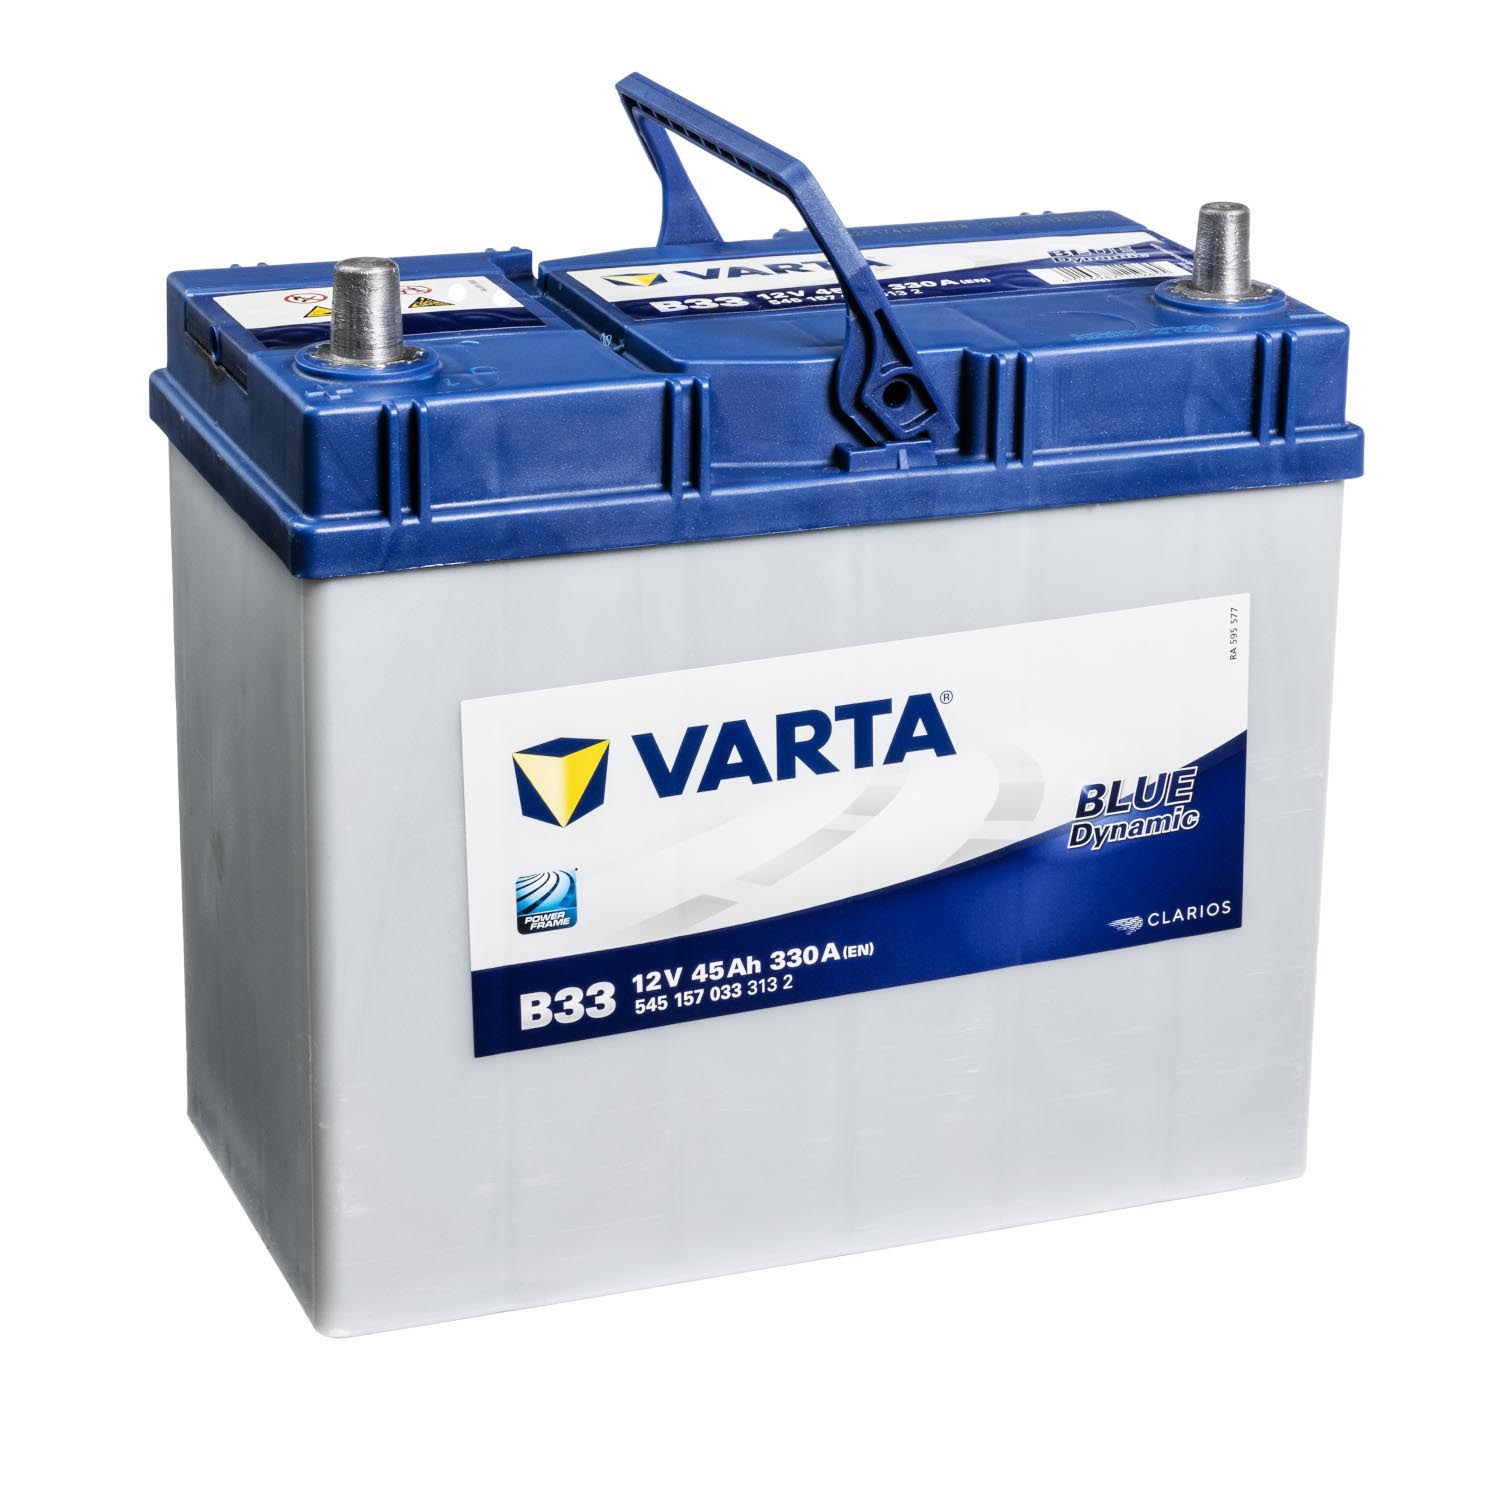 https://batterie24.de/media/image/db/1b/9a/varta-blue-dynamic-b33-autobatterie-12v-45ah-3073-16285.jpg